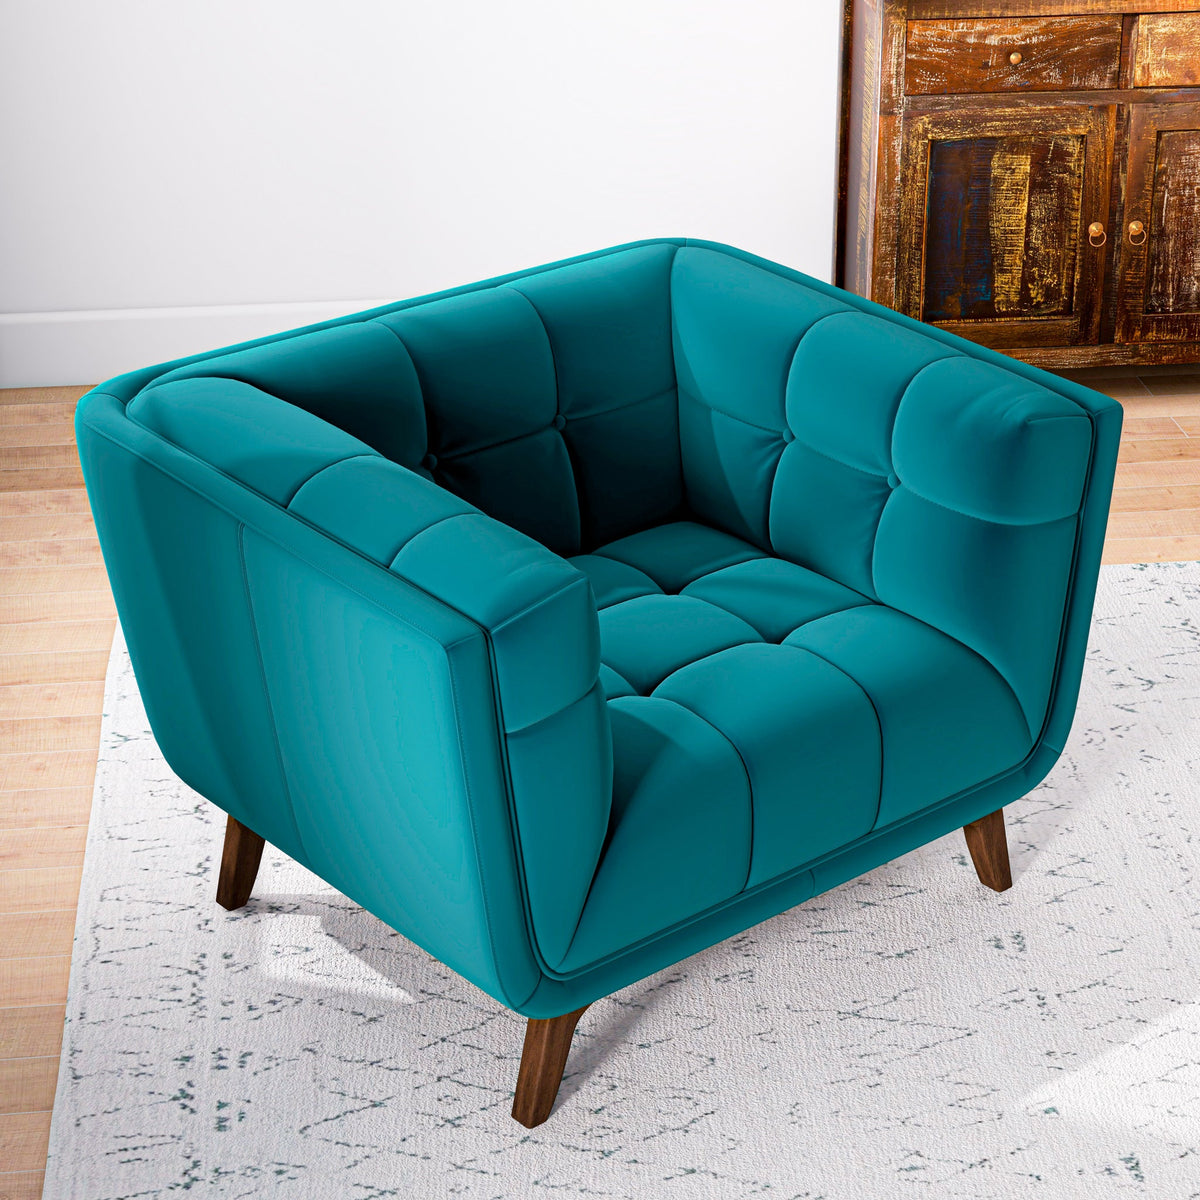 Kano Lounge Chair (Teal Velvet) | Mid in Mod | Houston TX | Best Furniture stores in Houston